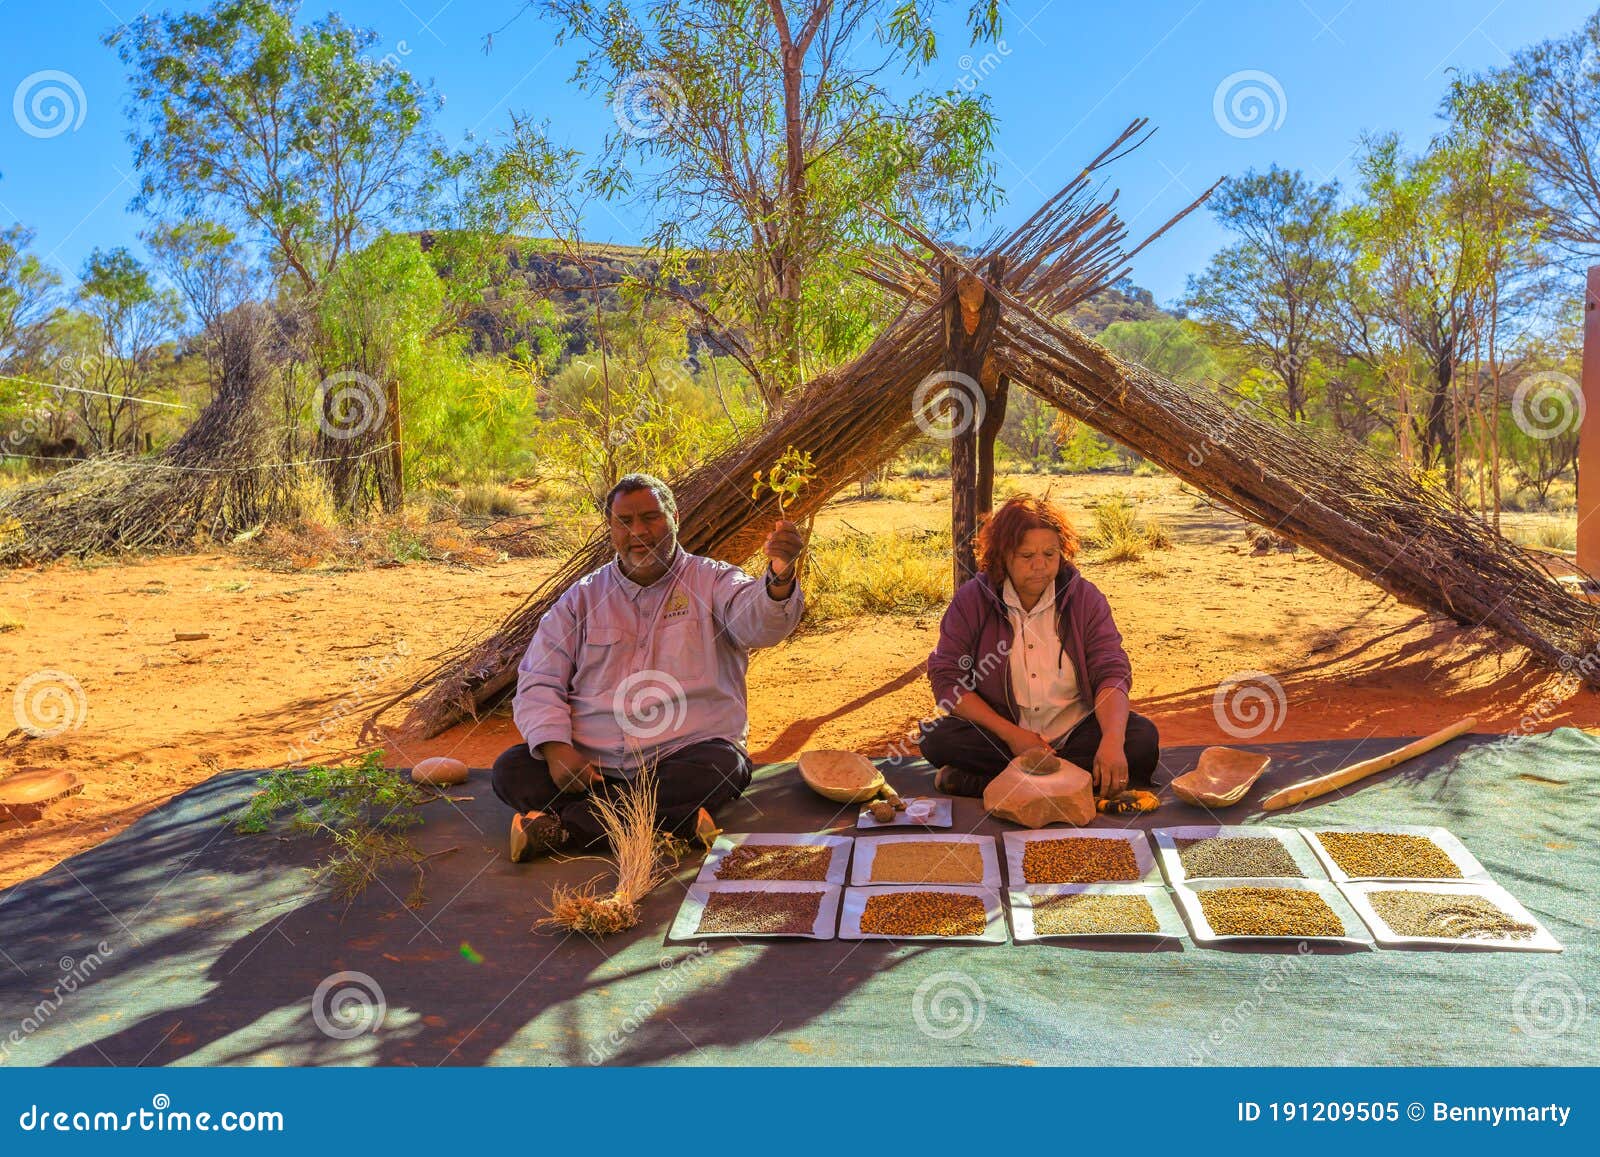 Australian Aboriginal People Editorial Image - Image of culture, centre: